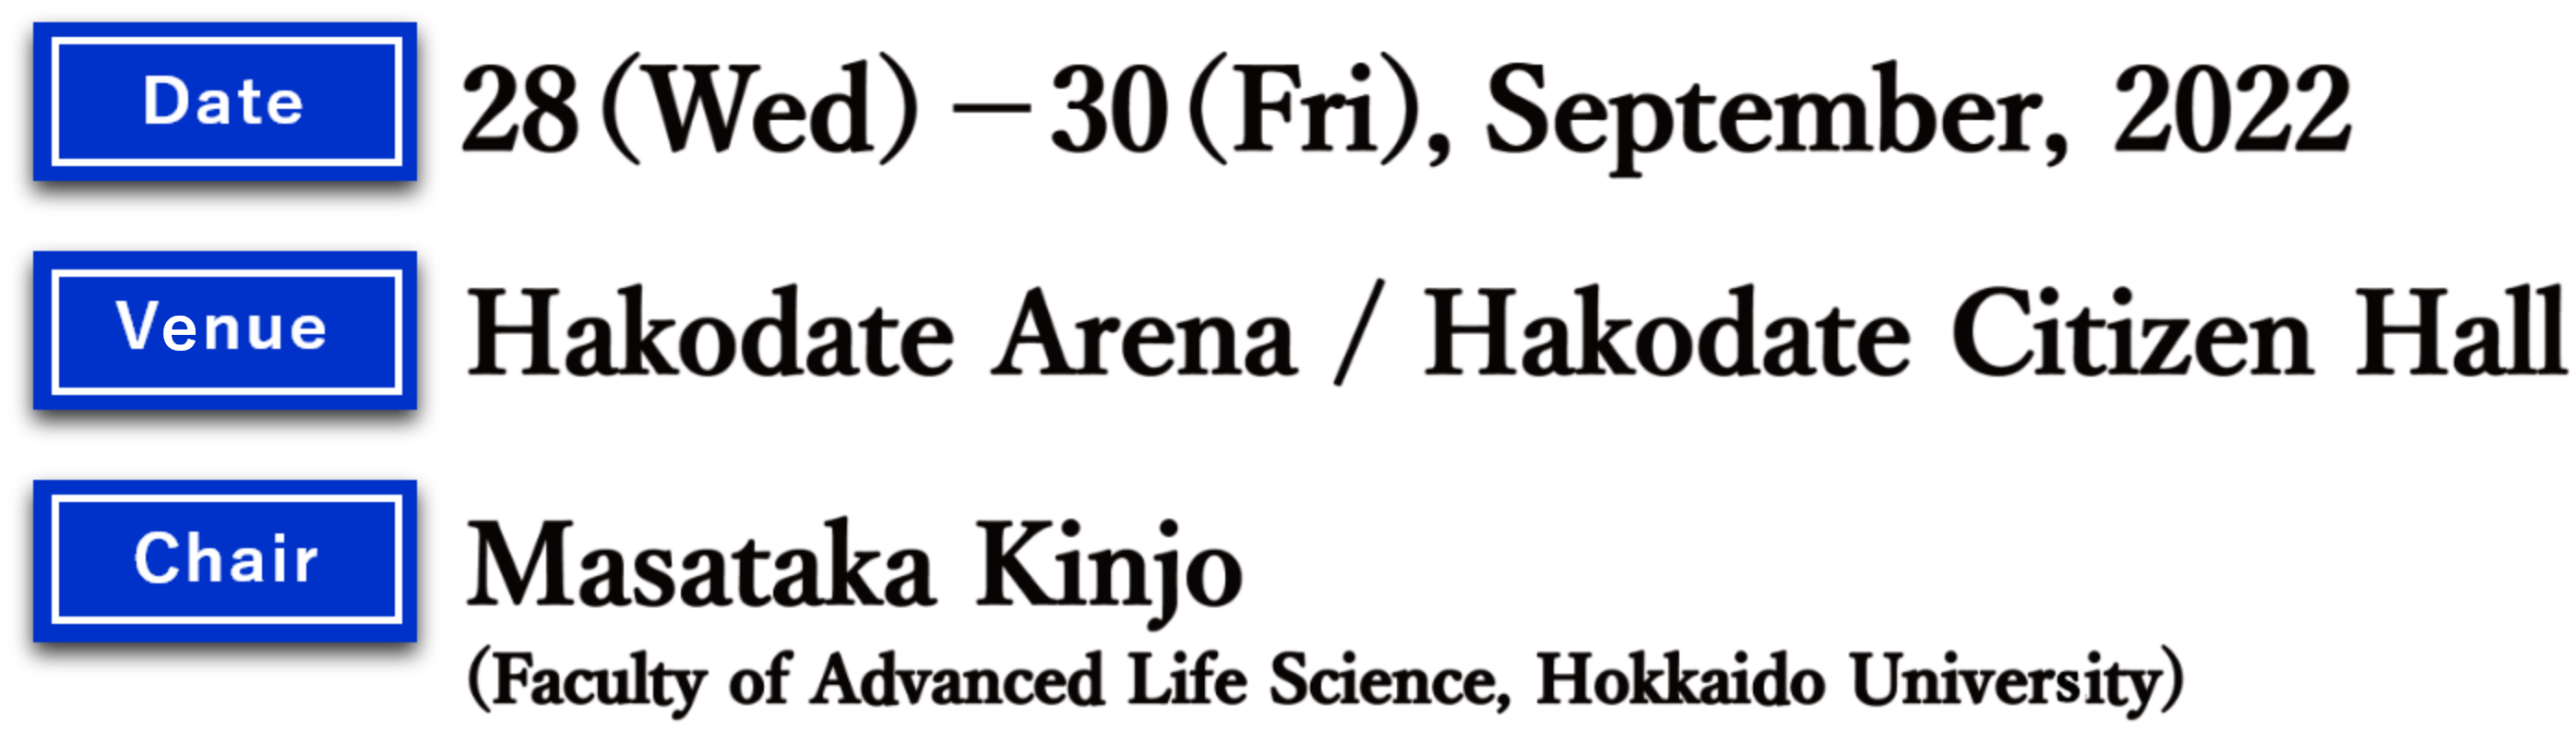  Date: 28 (Wed.)- 30 (Fri.), September, 2022 Venue：Hakodate Arena/Hakodate Citizen Hall
 Chair：Masataka Kinjo (Faculty of Advanced Life Science, Hokkaido University)
          